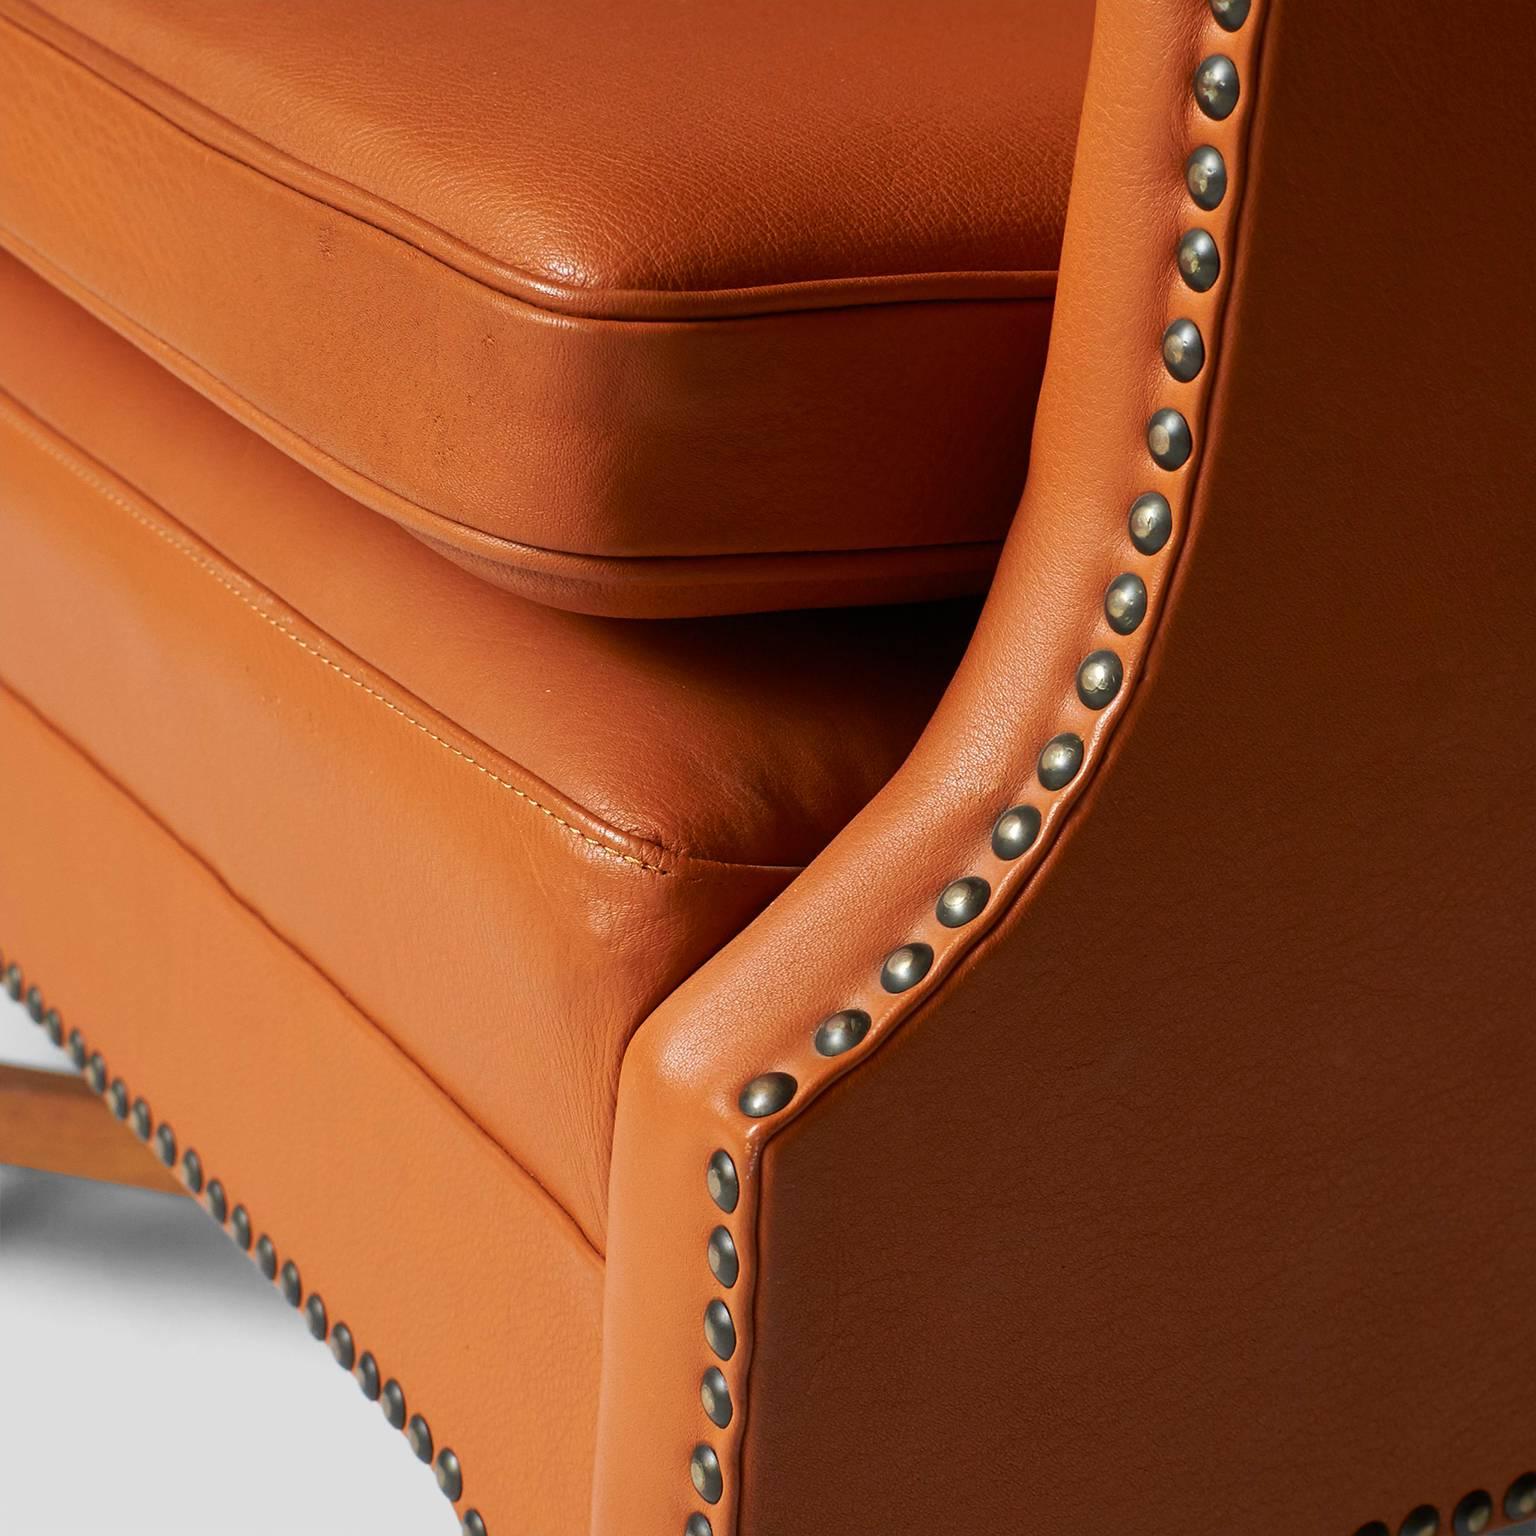 Leather Kaare Klint Sofa Model #4118 by Rud Rasmussen